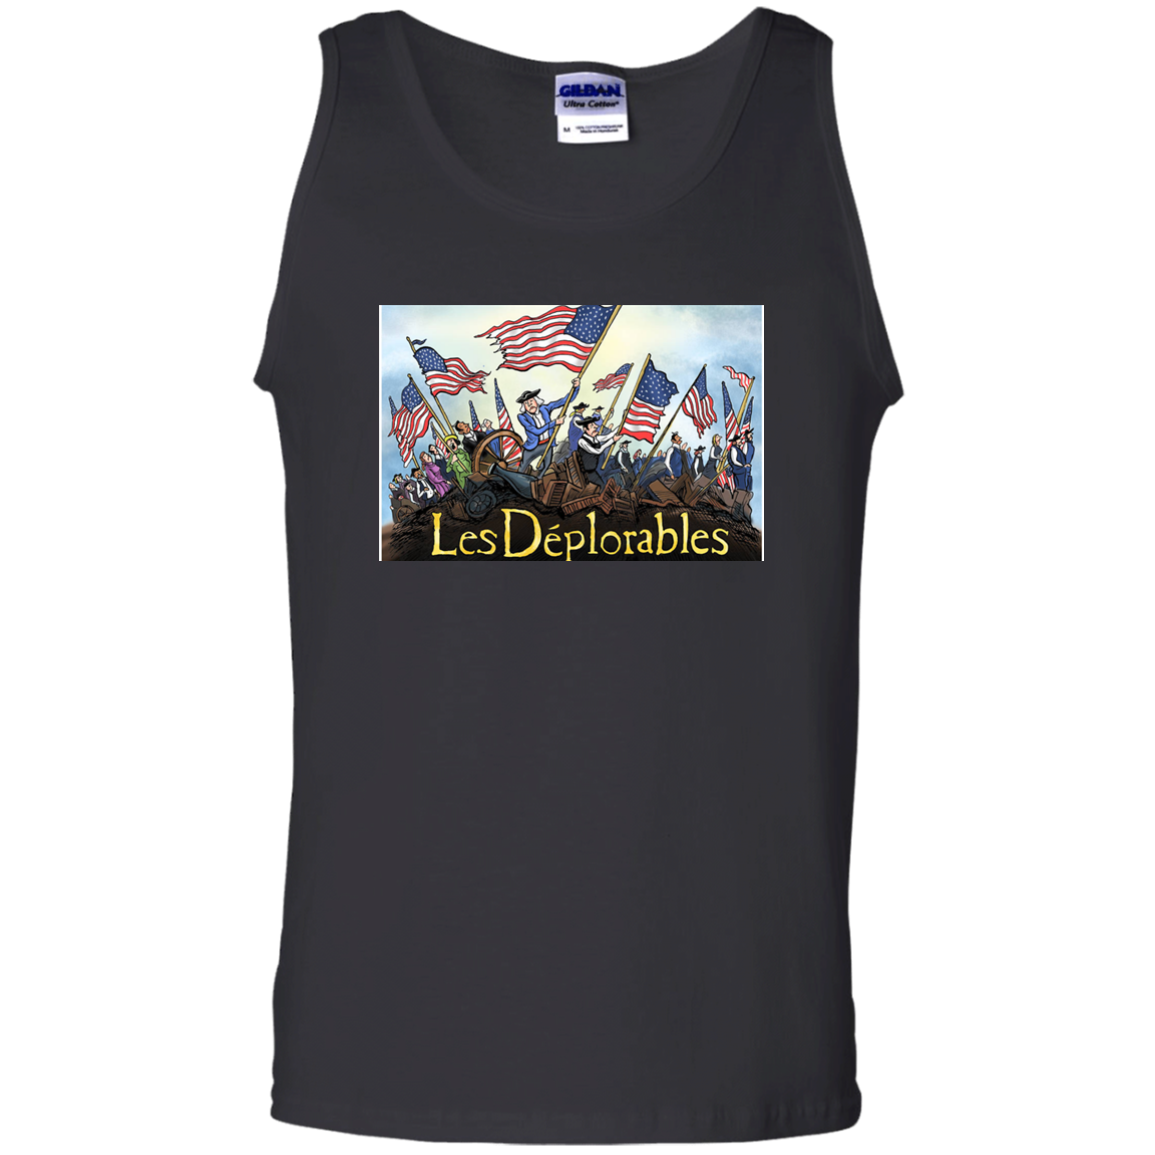 Les Déplorables artwork shirt - Les Deplorables - ifrogtees